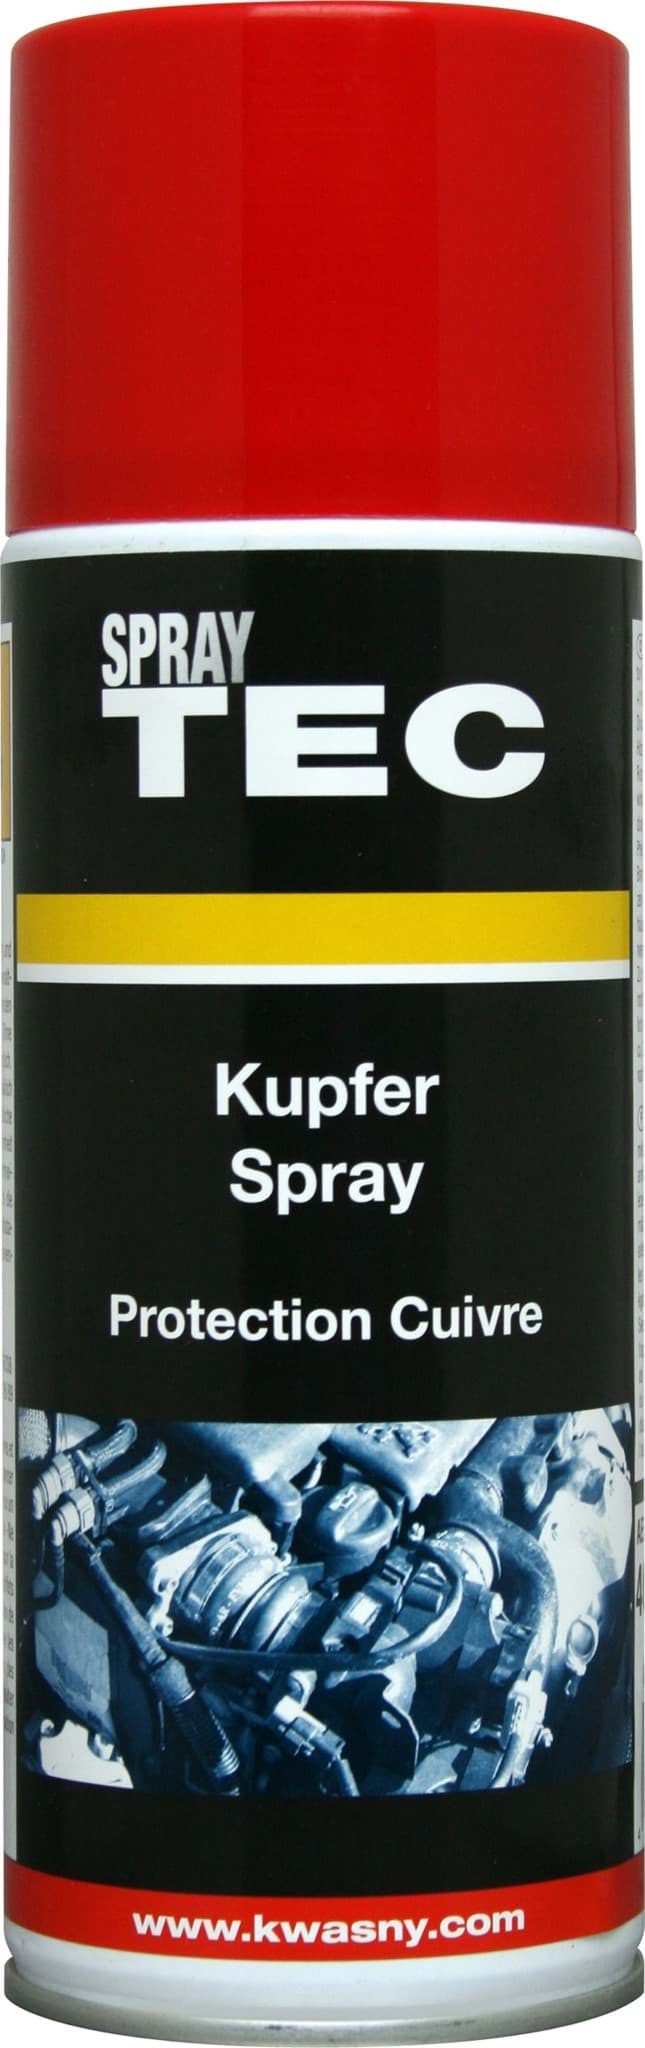 Изображение SprayTec Kupfer-Spray 400ml